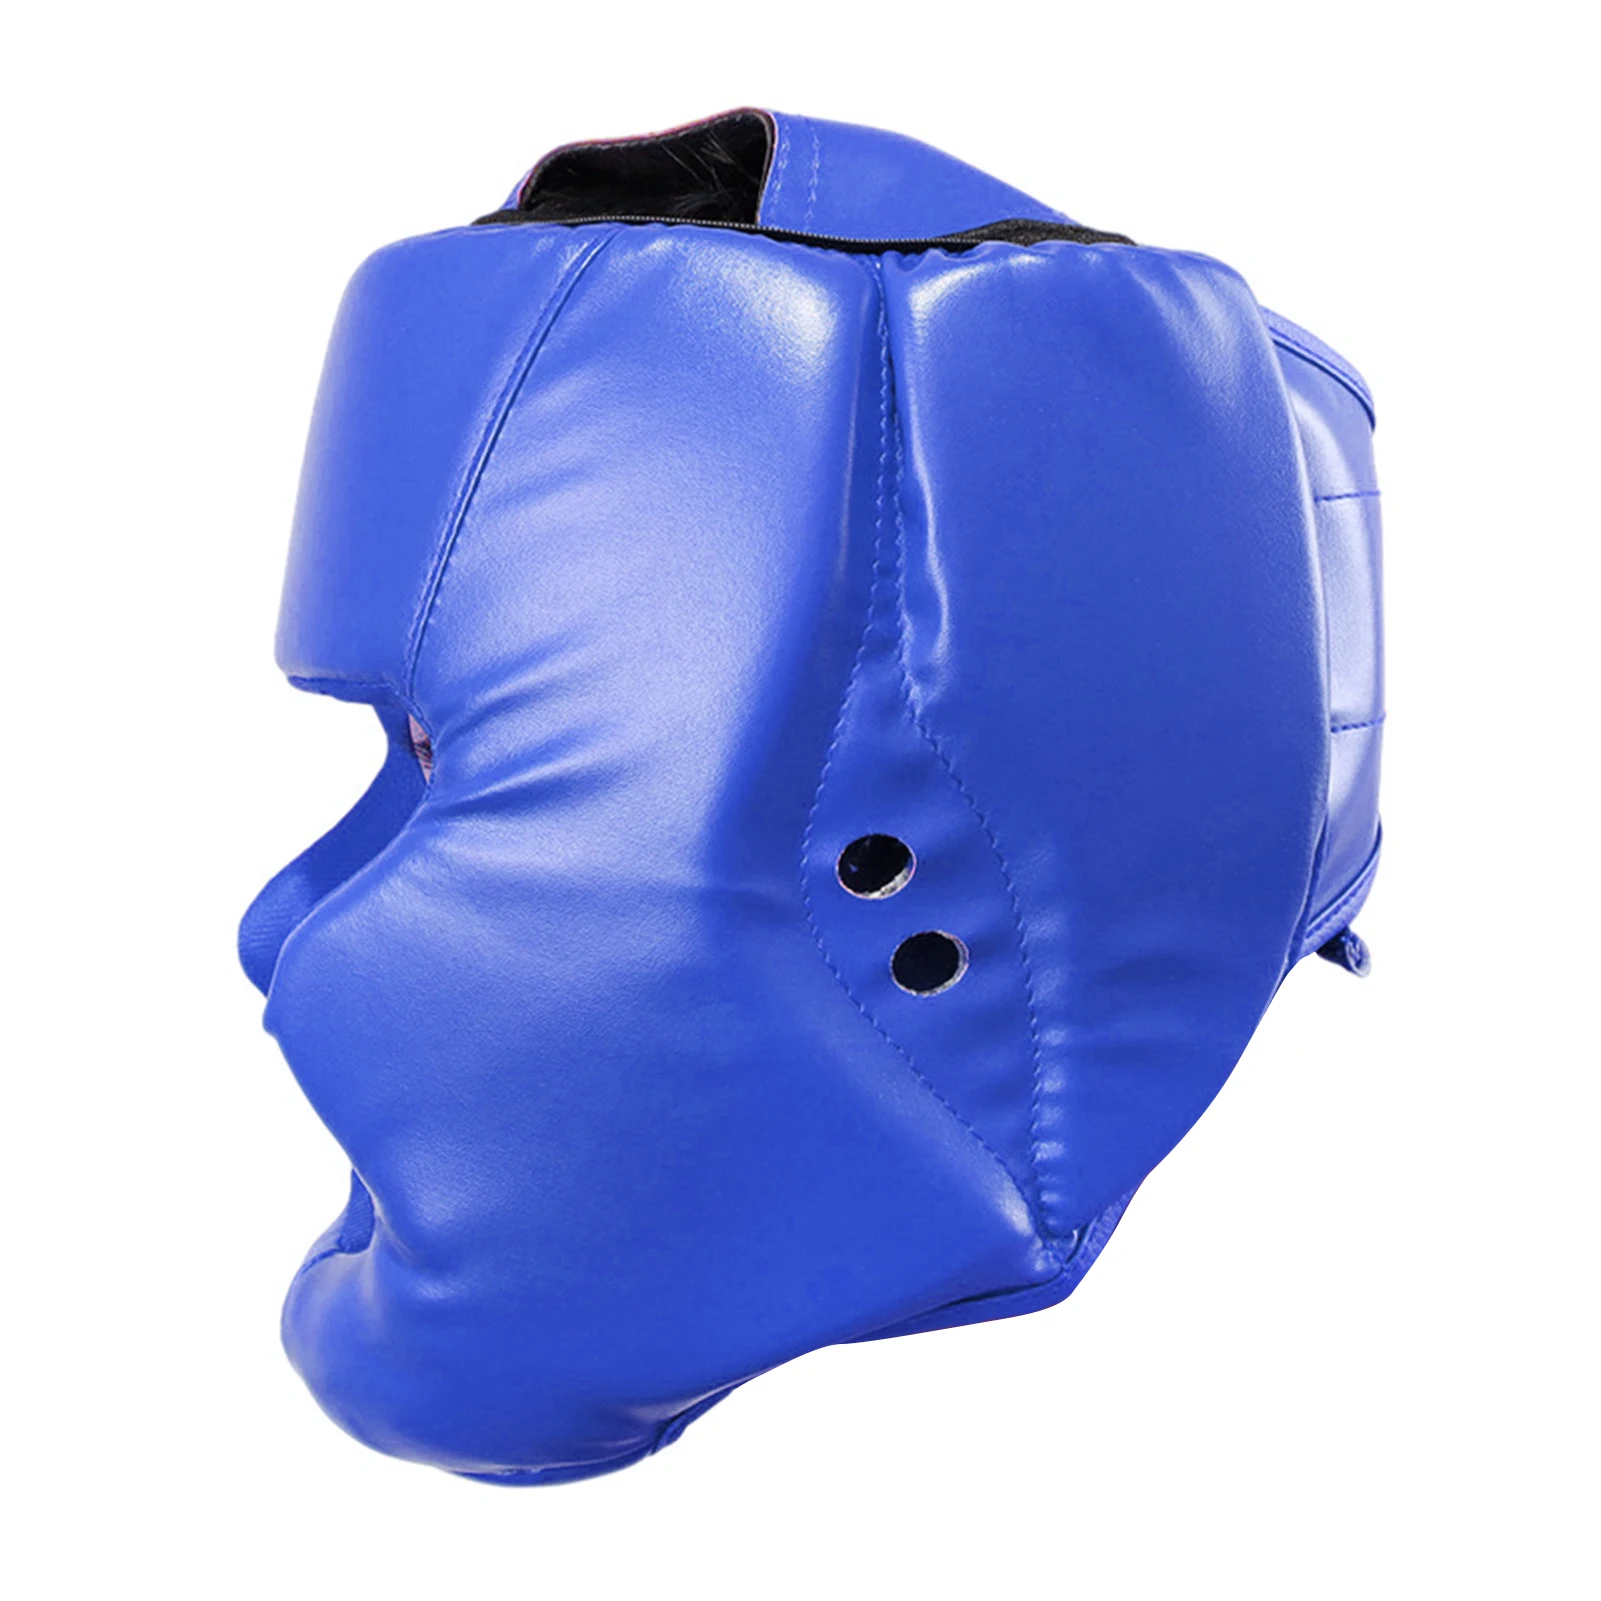 

Promotion Boxing MMA Safety Helmet Head Gear Protectors Adult Child Training Headgear Muay Thai Kickboxing Full-covered Helmets